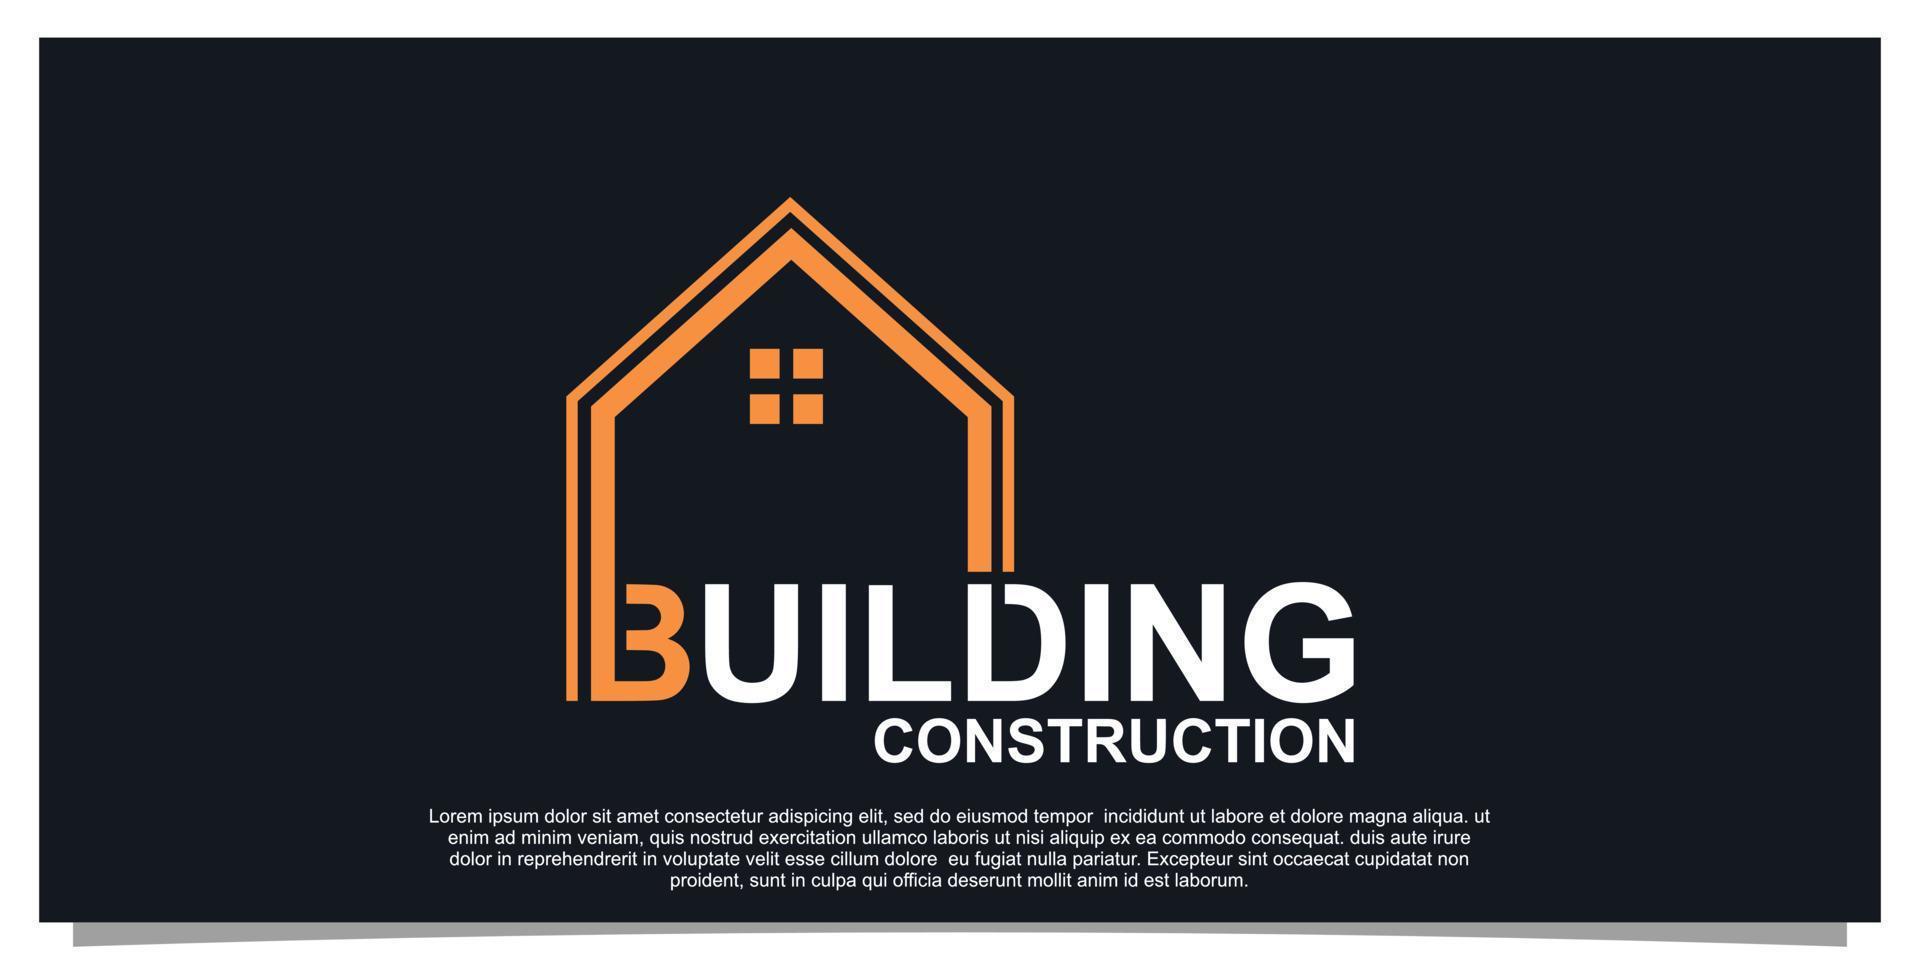 Gebäudekonstruktions-Logo-Design mit kreativem Konzept-Premium-Vektor vektor